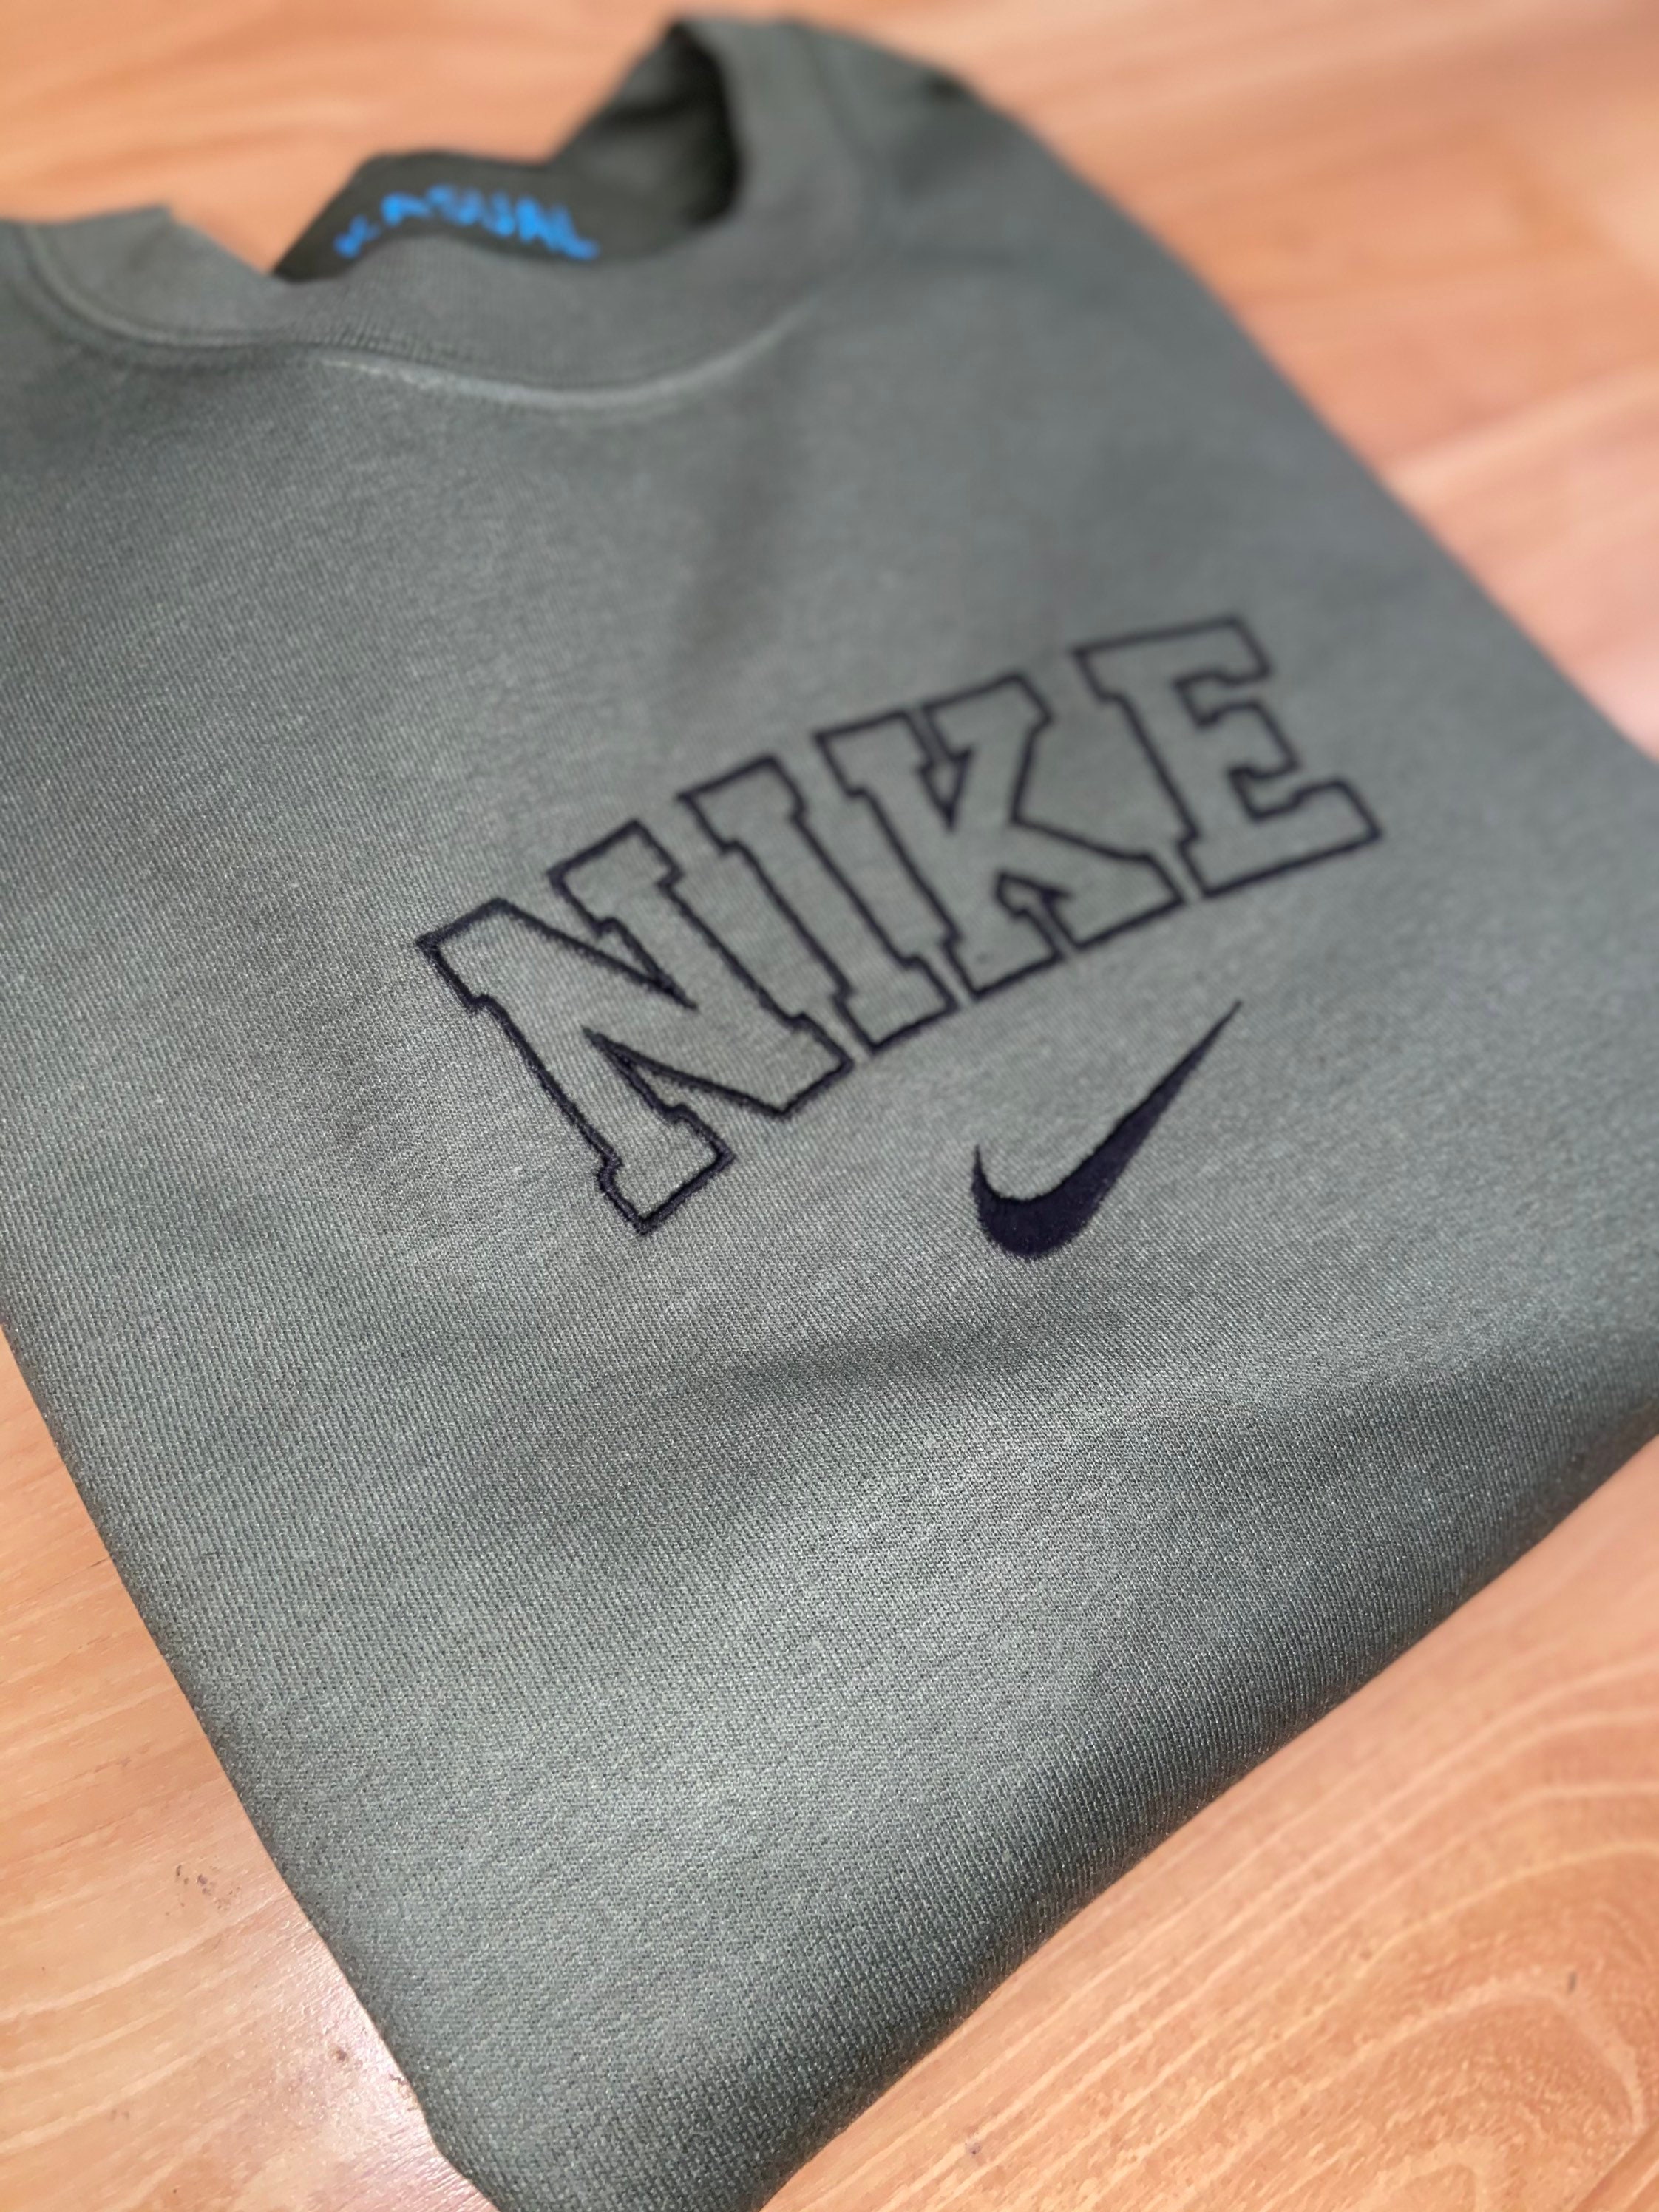 SINGLE OUTLINE Custom Embroidered Nike inspired Crewnecks | Etsy